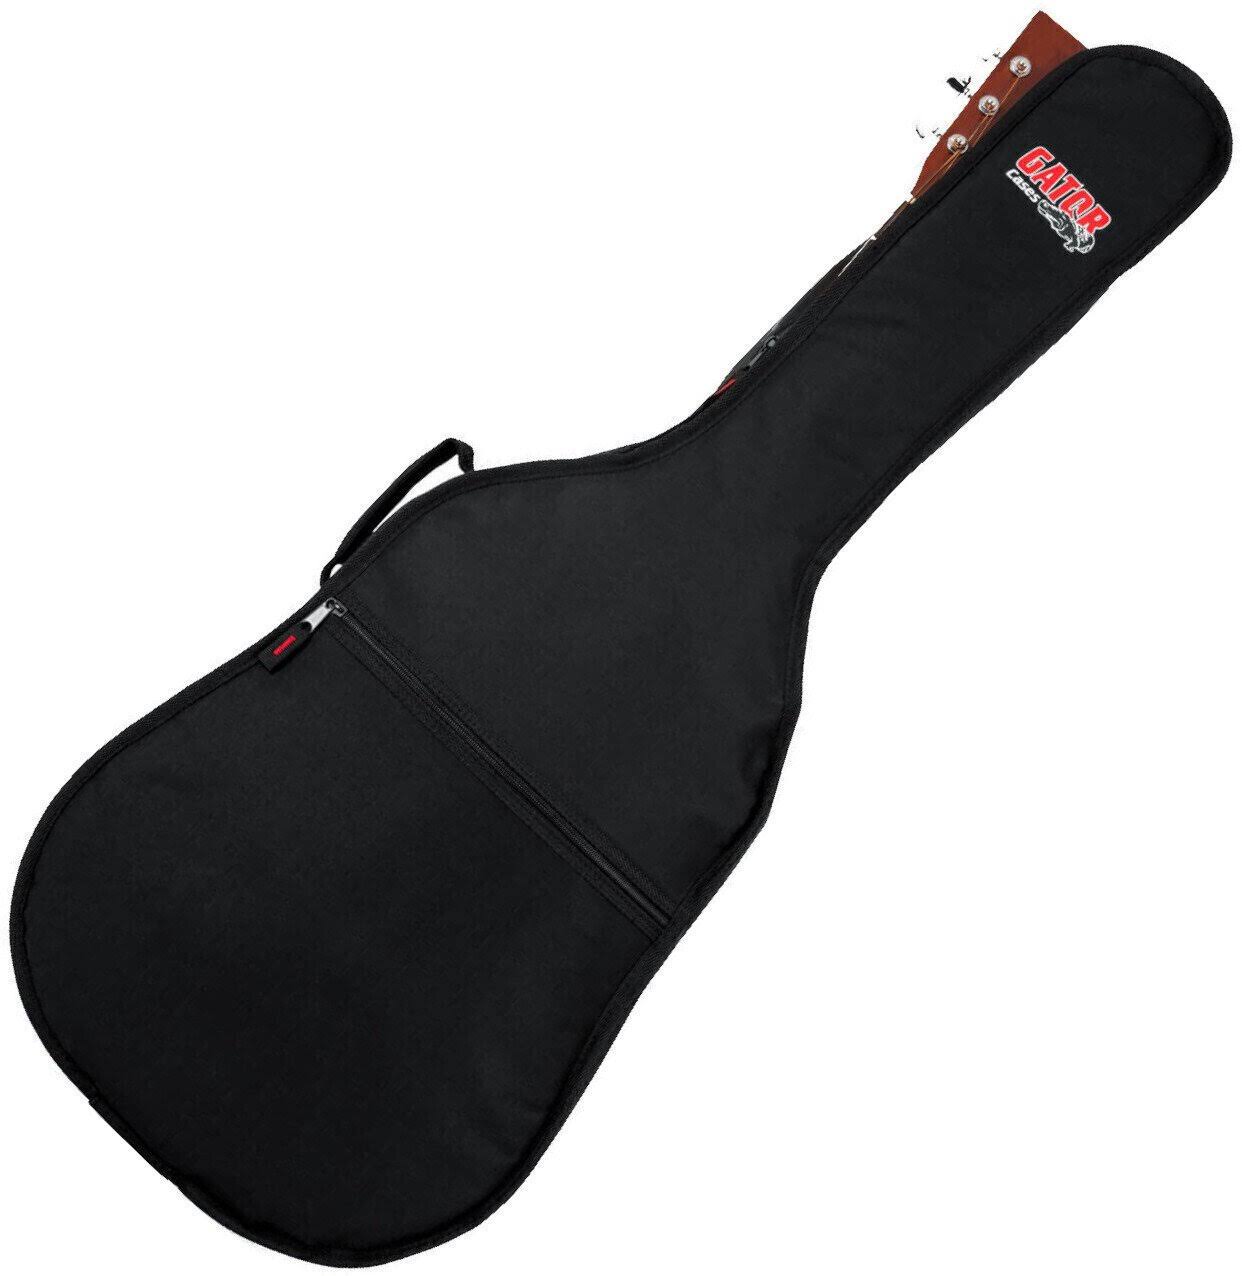 Gator Cases Mini Acoustic Guitar Gig Bag